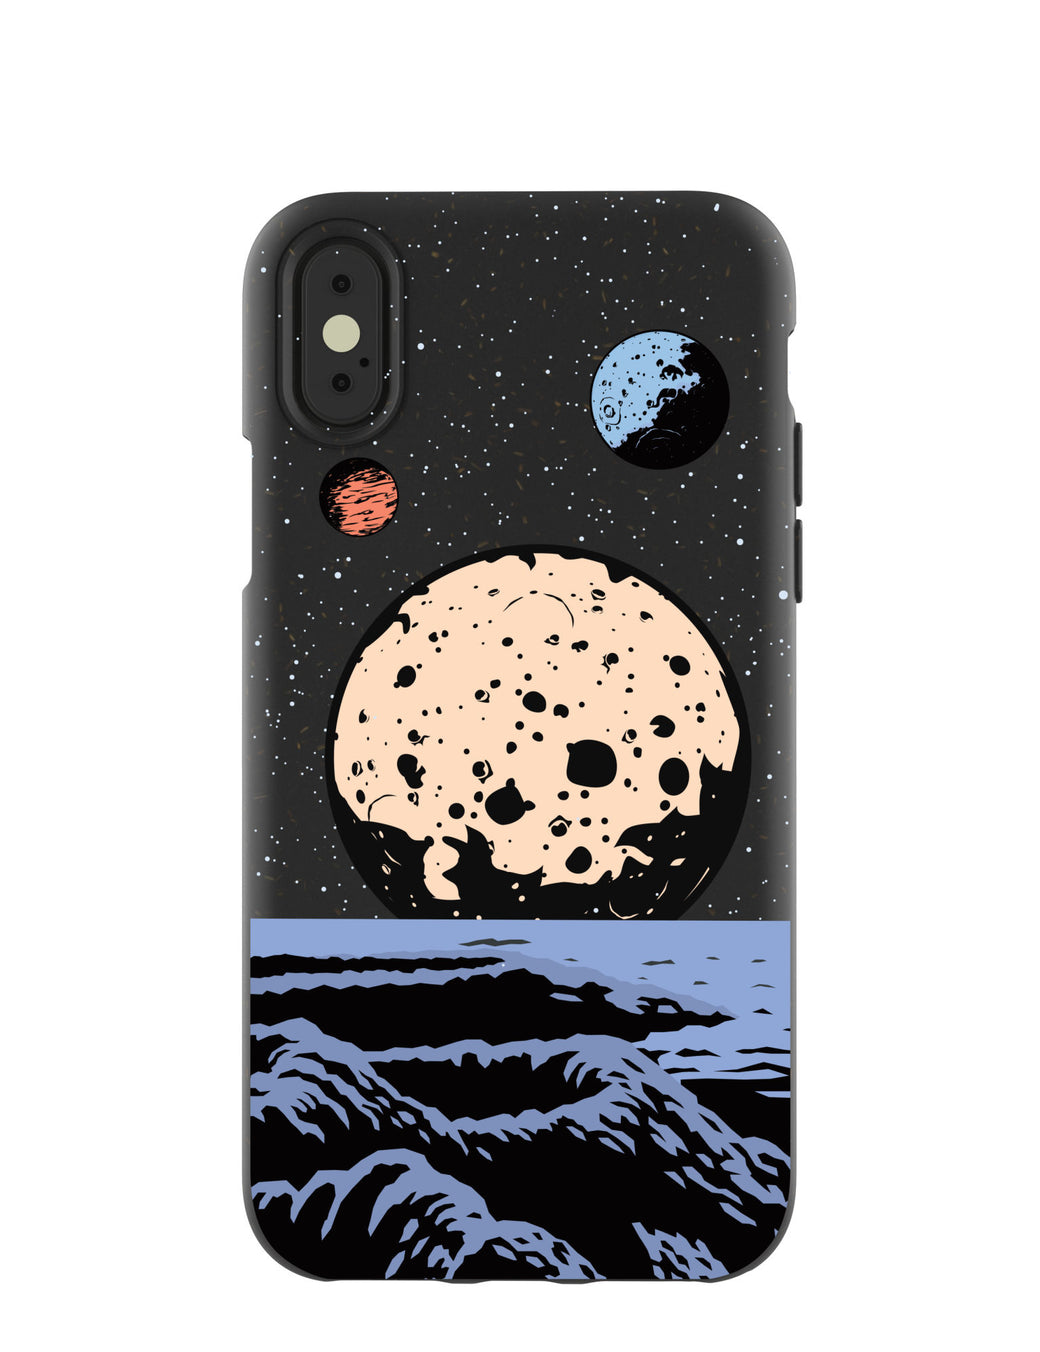 Black Retro Moon iPhone X Case